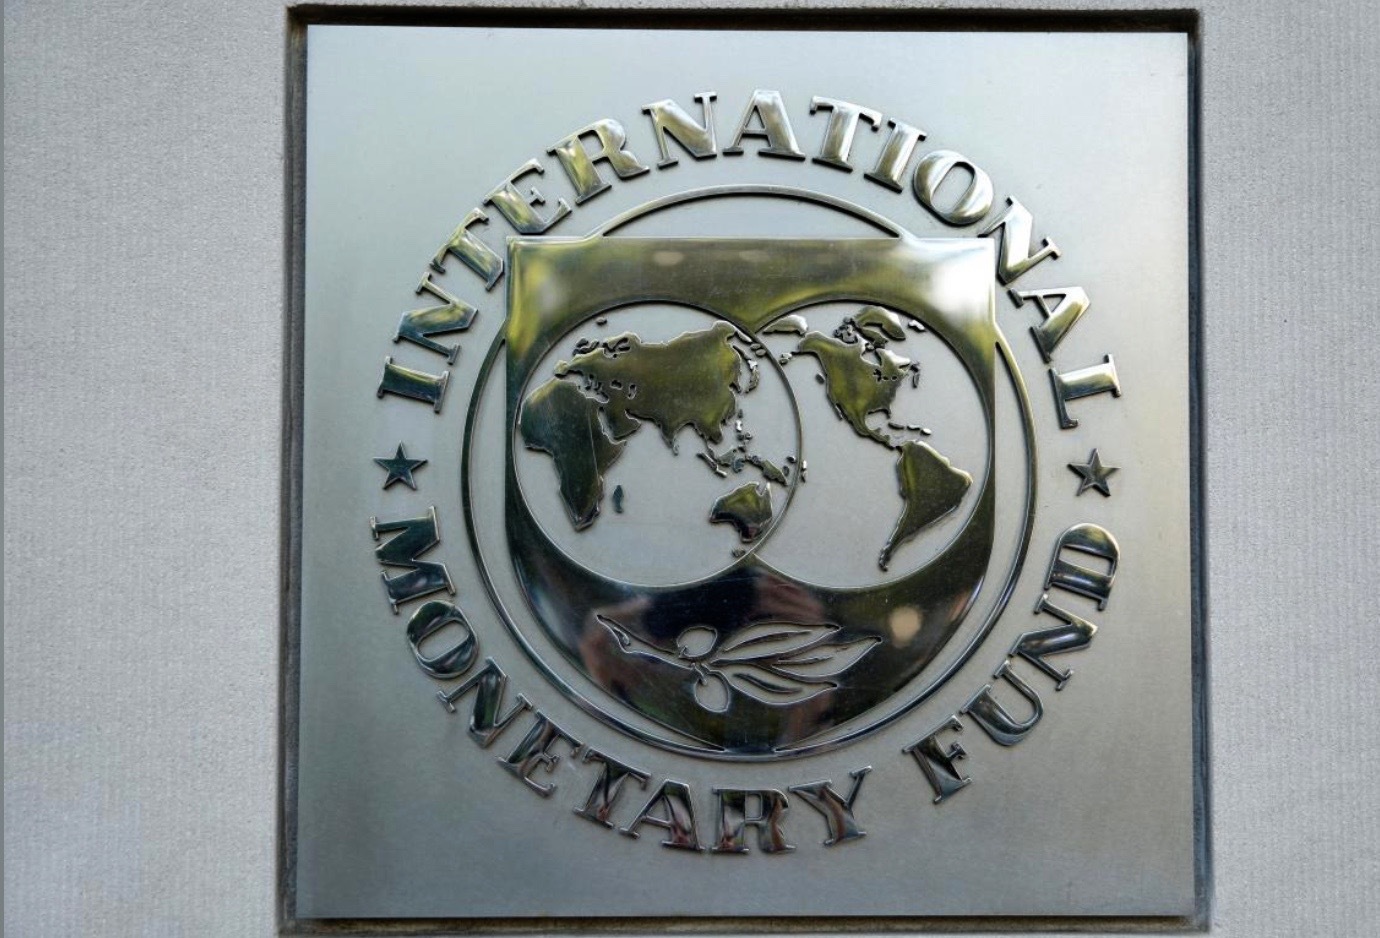 IMF To Add Islamic Finance To Market Surveillance In 2019